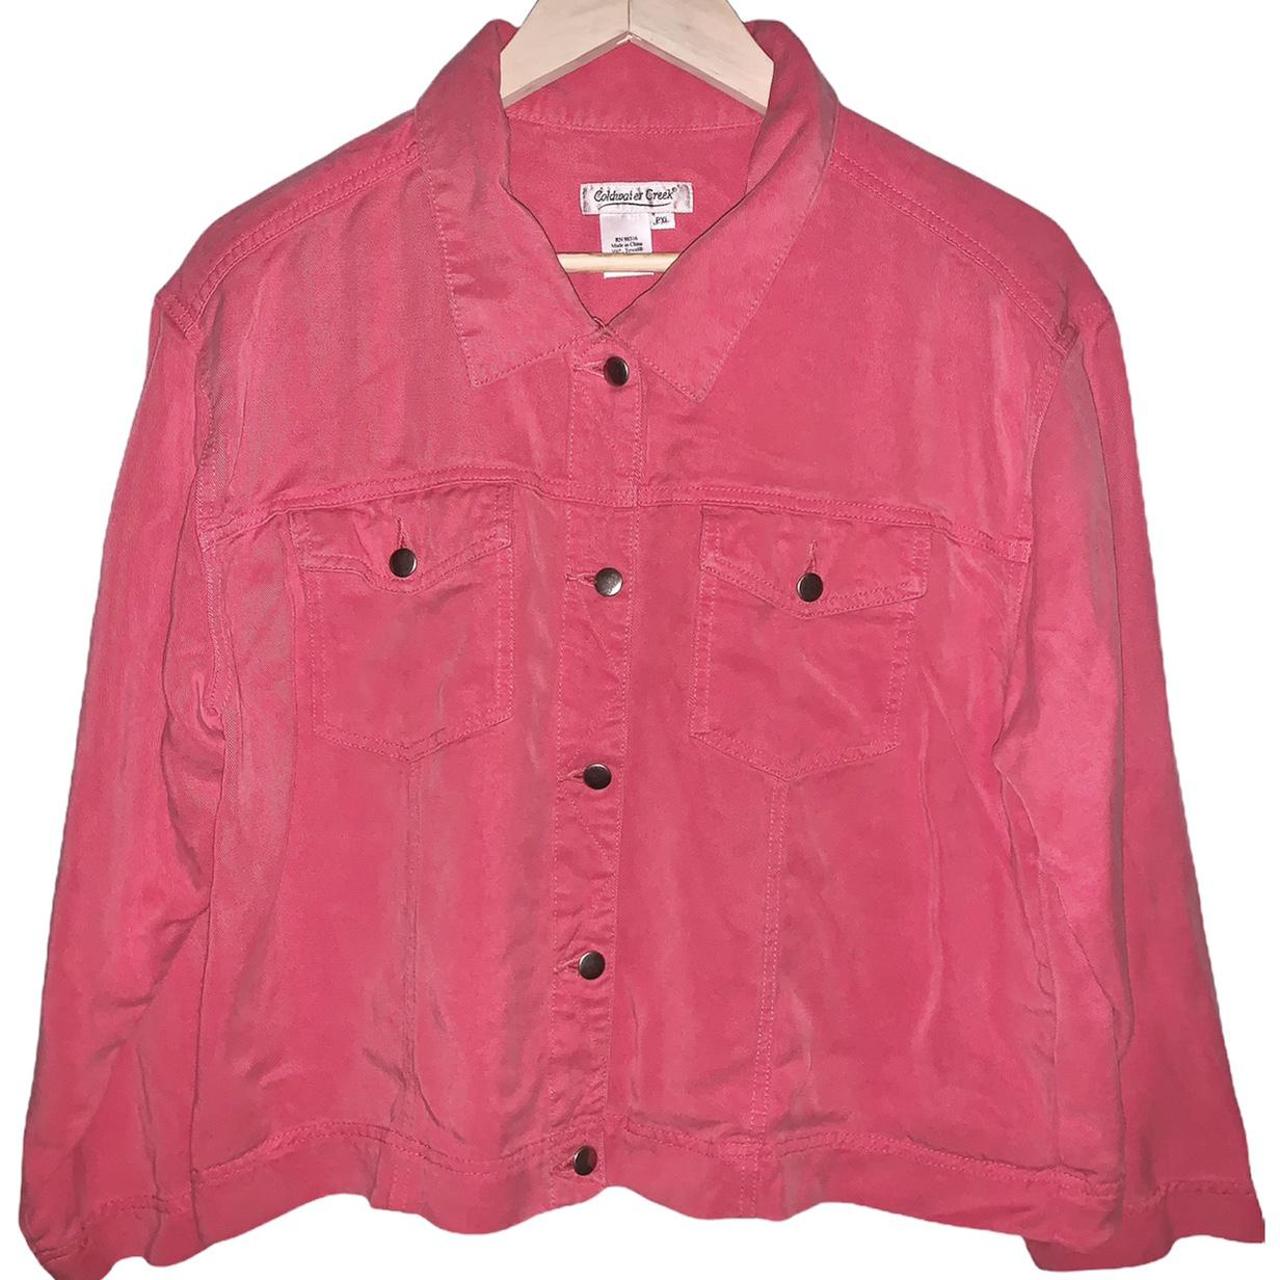 Coldwater Creek Women's Pink Jacket